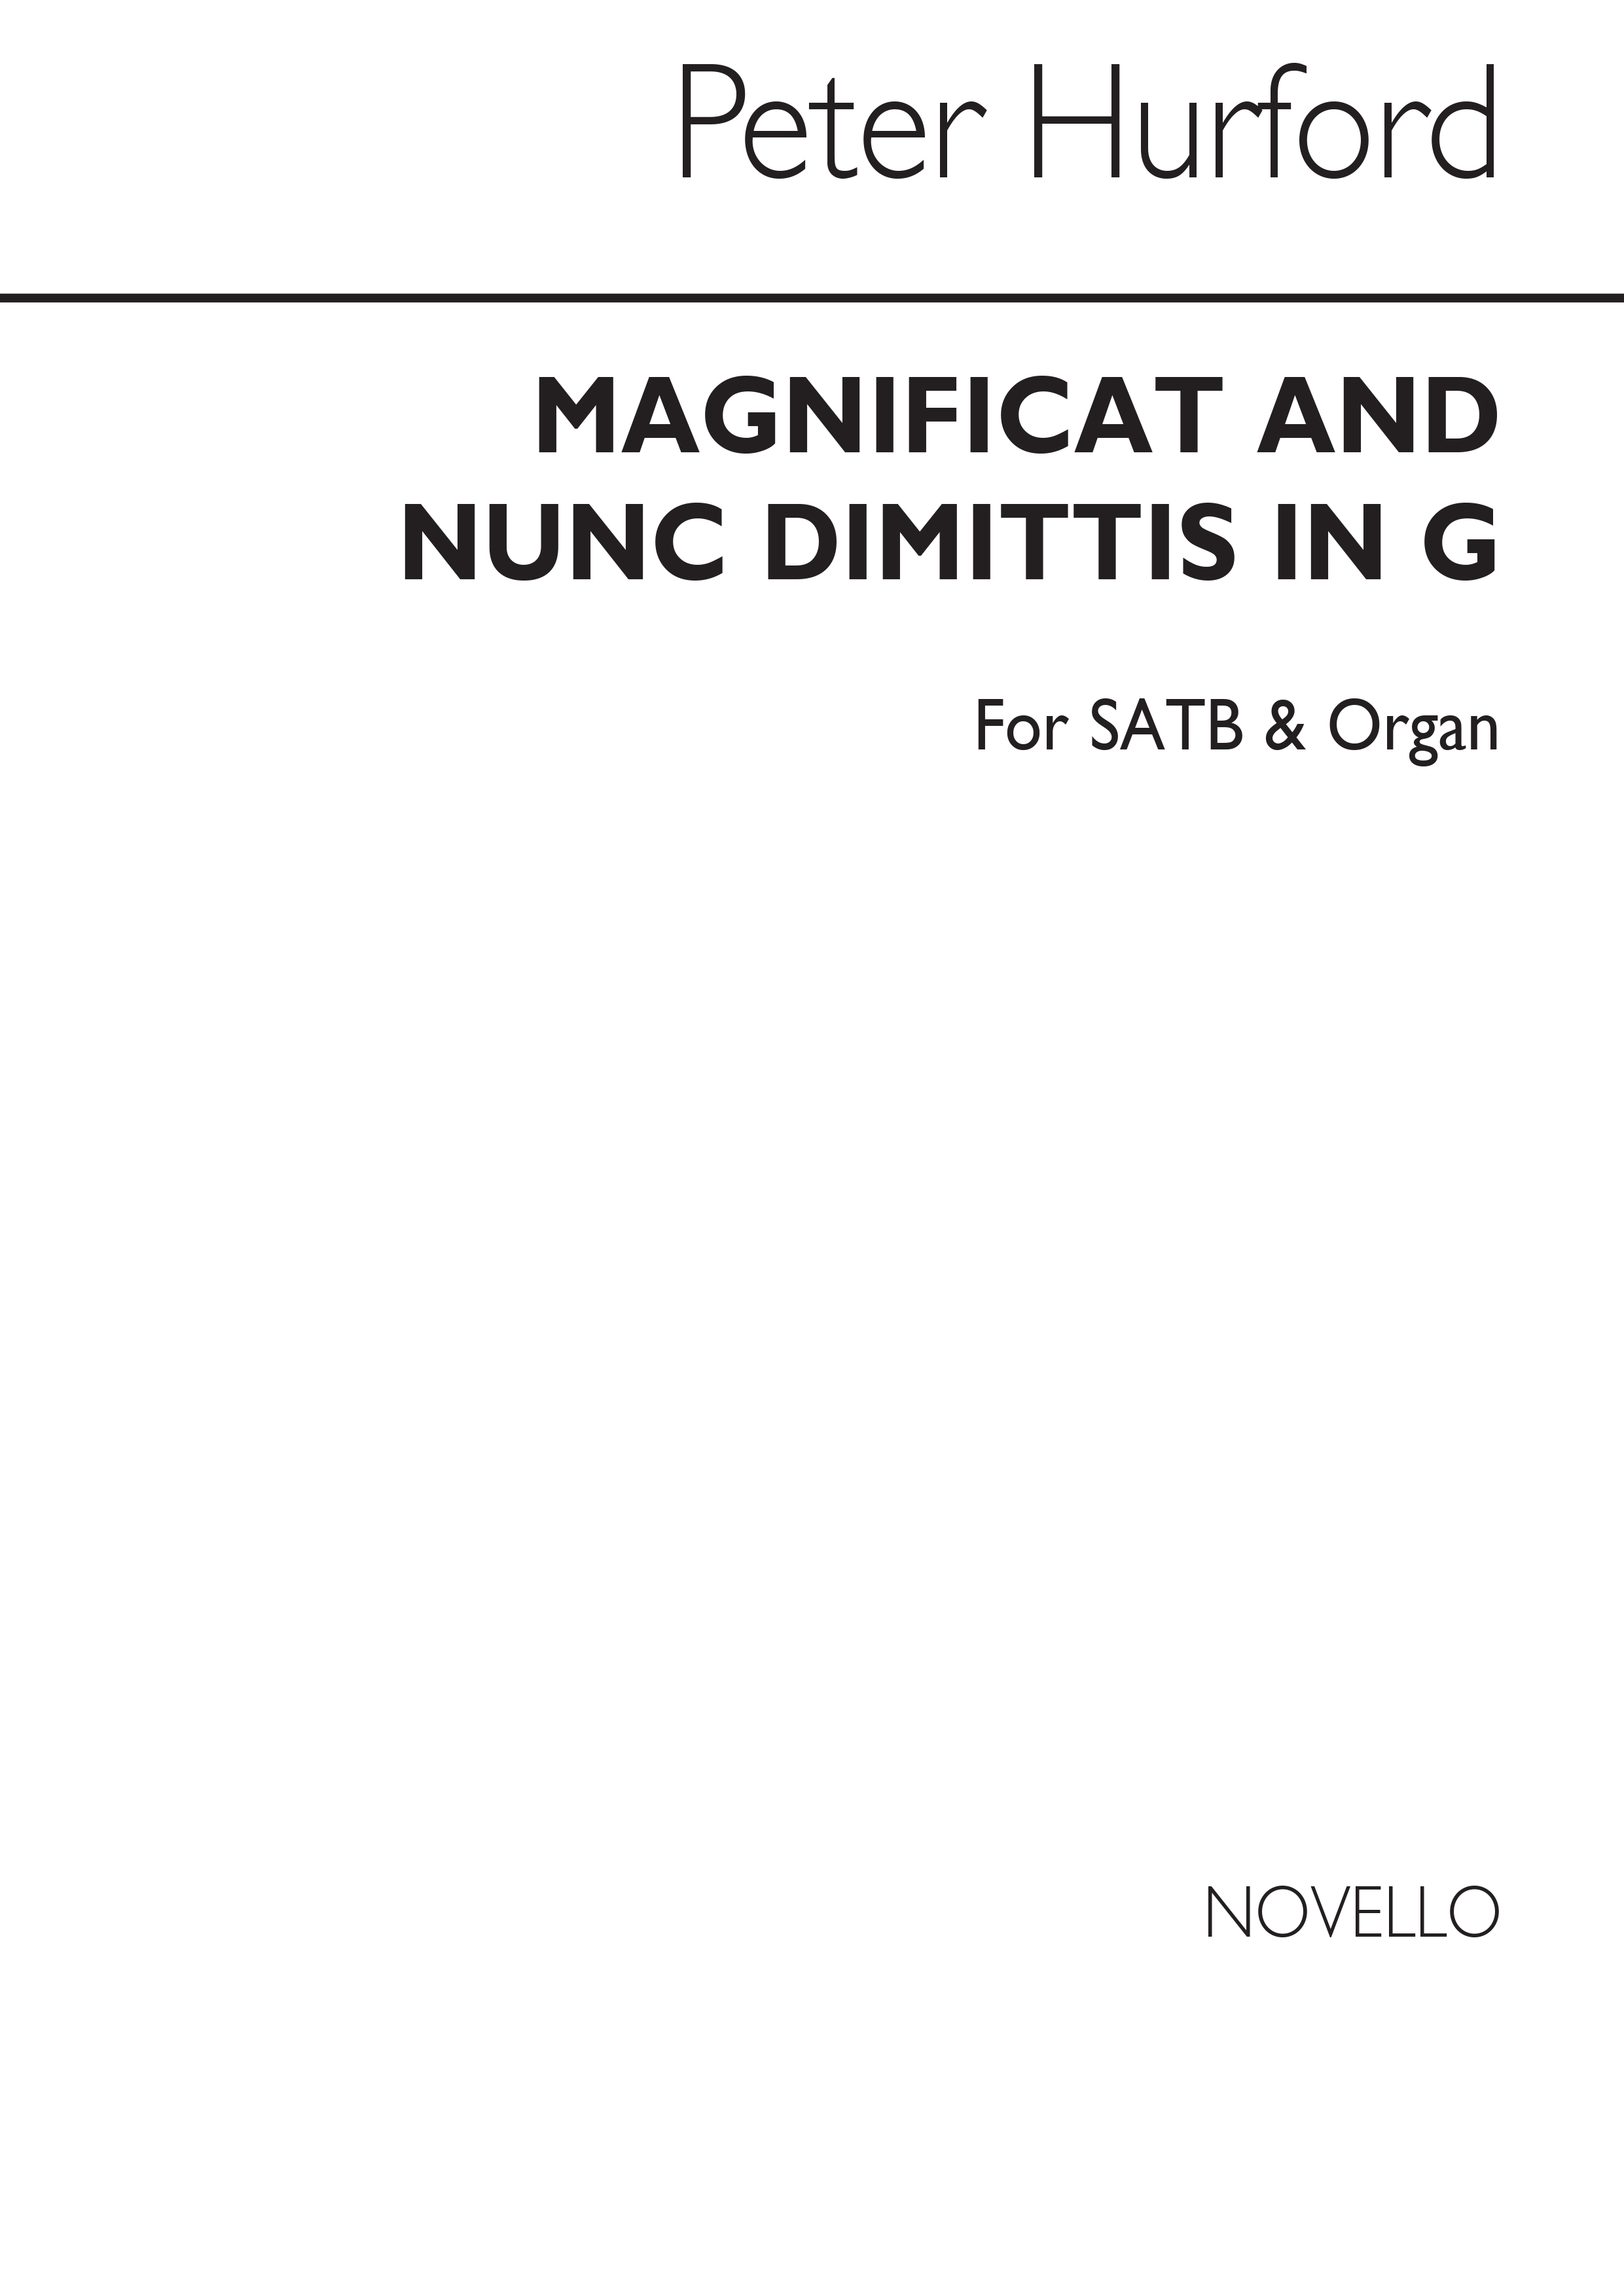 Hurford: Magnificat And Nunc Dimittis In G for SATB Chorus (Pcb1399)